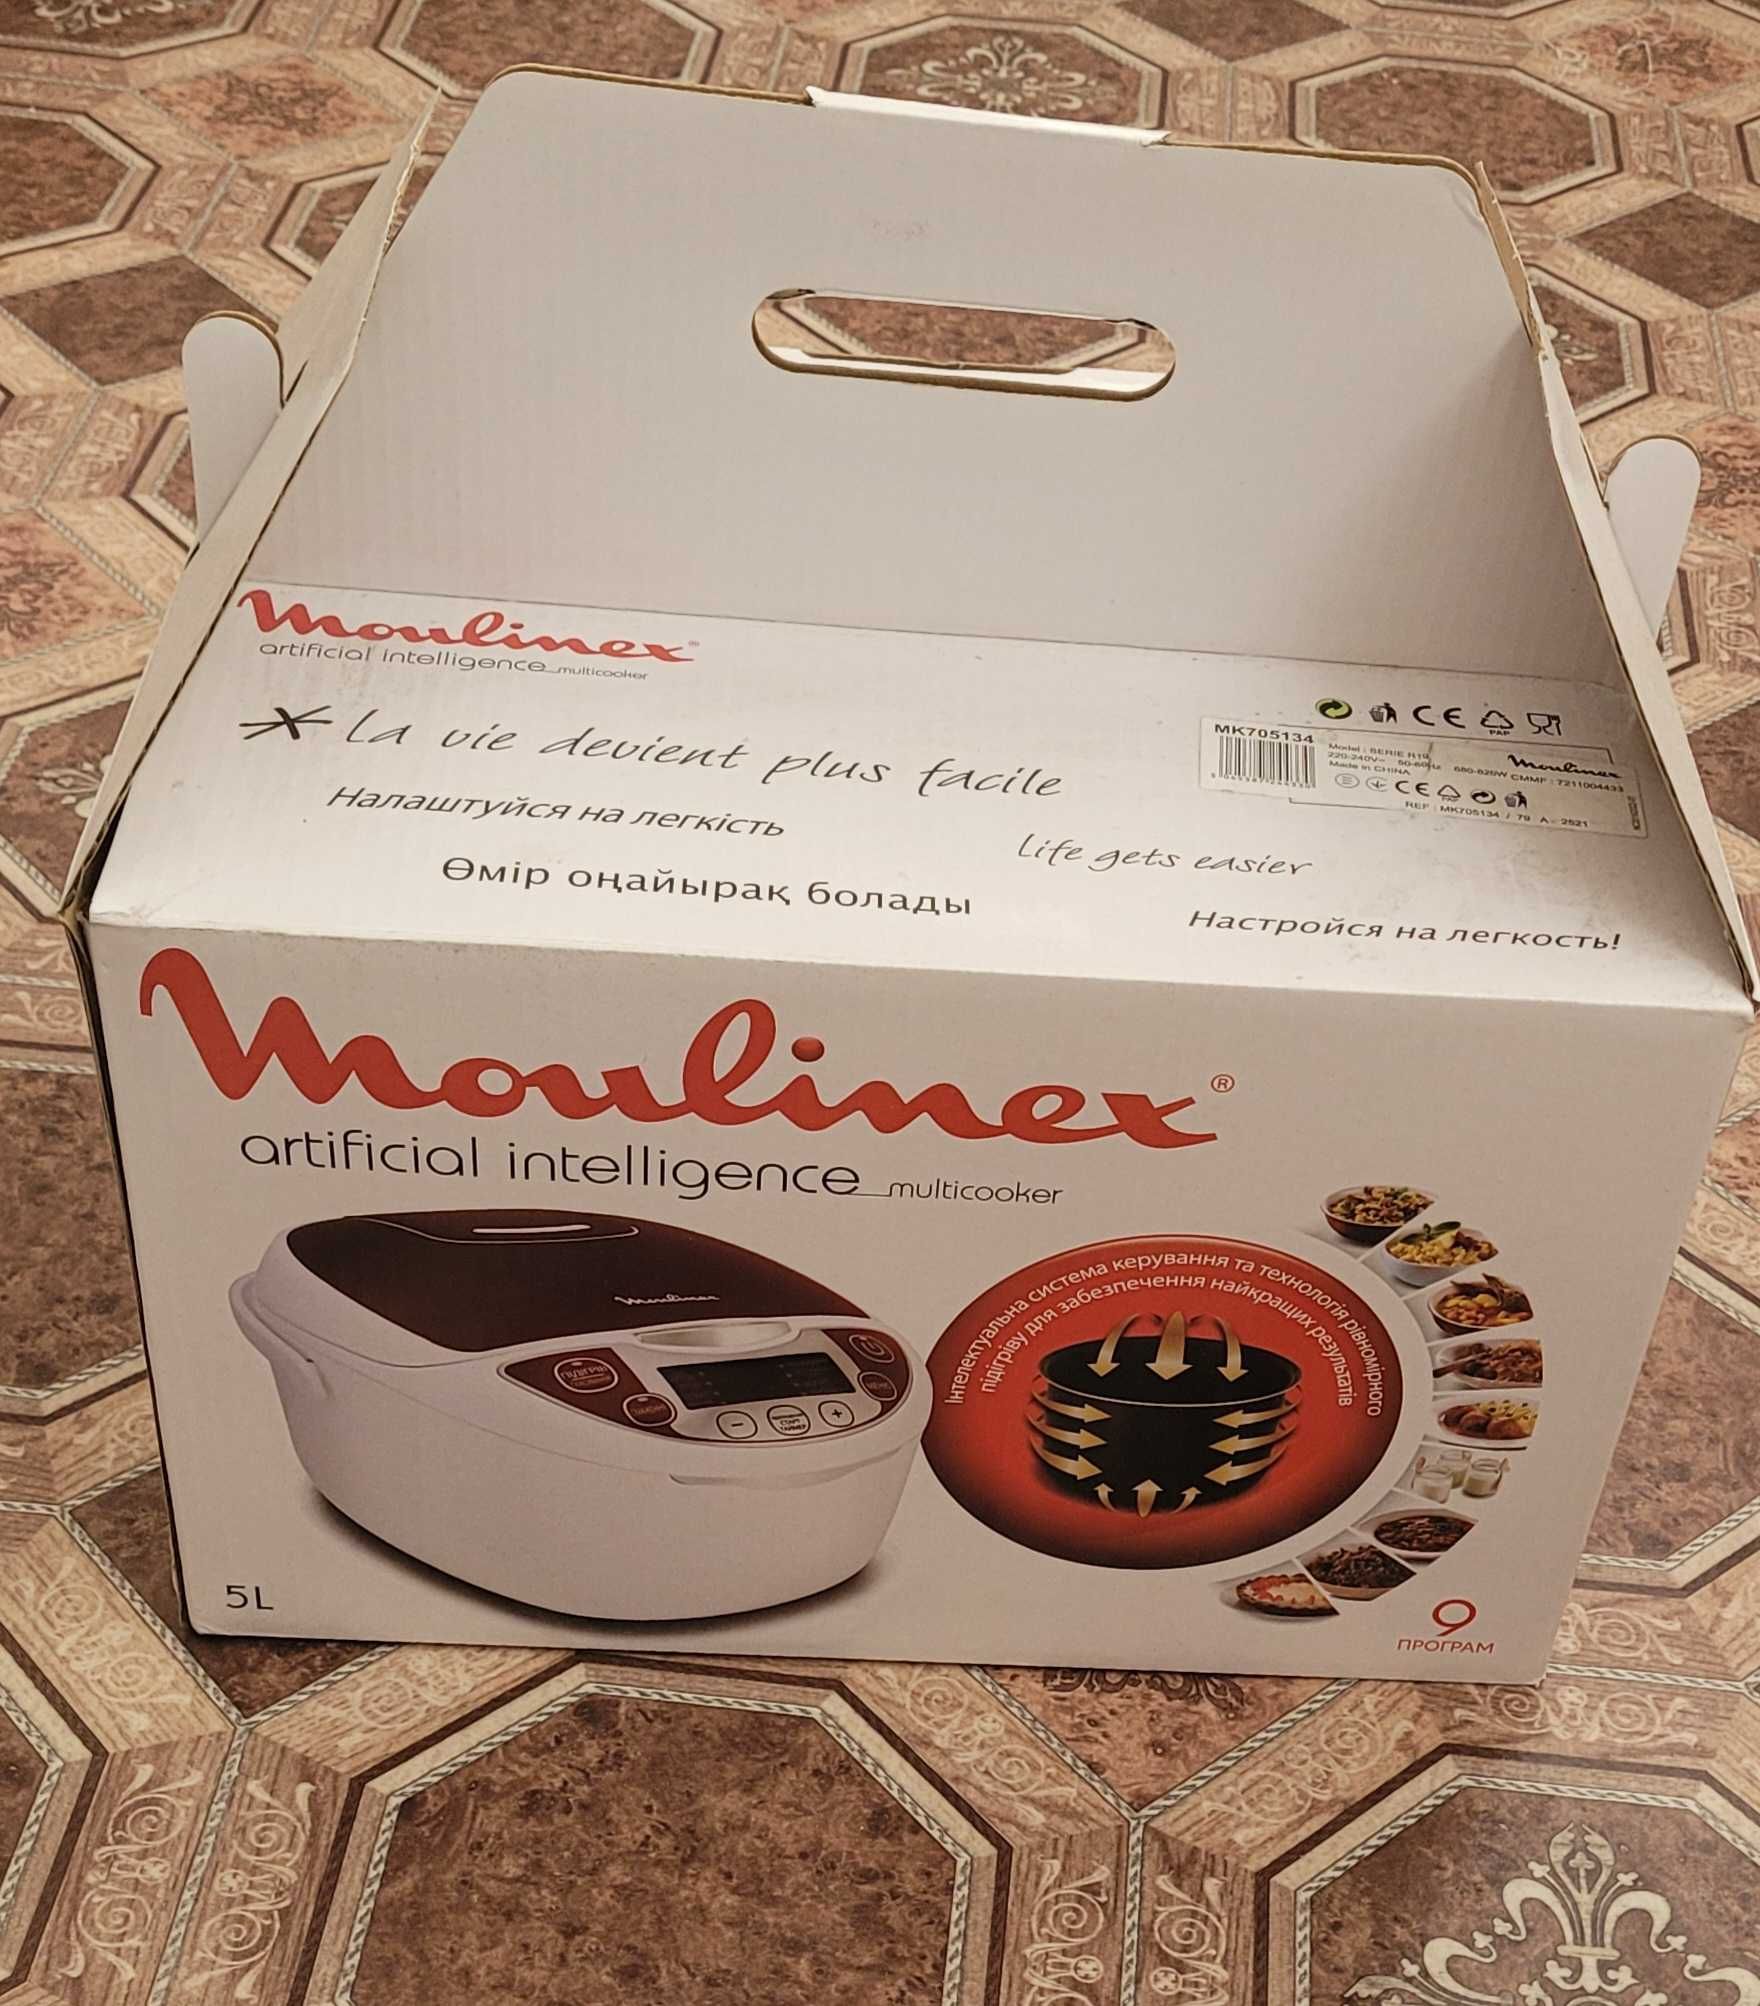 Мультиварка Moulinex artificial intelligence multicooker